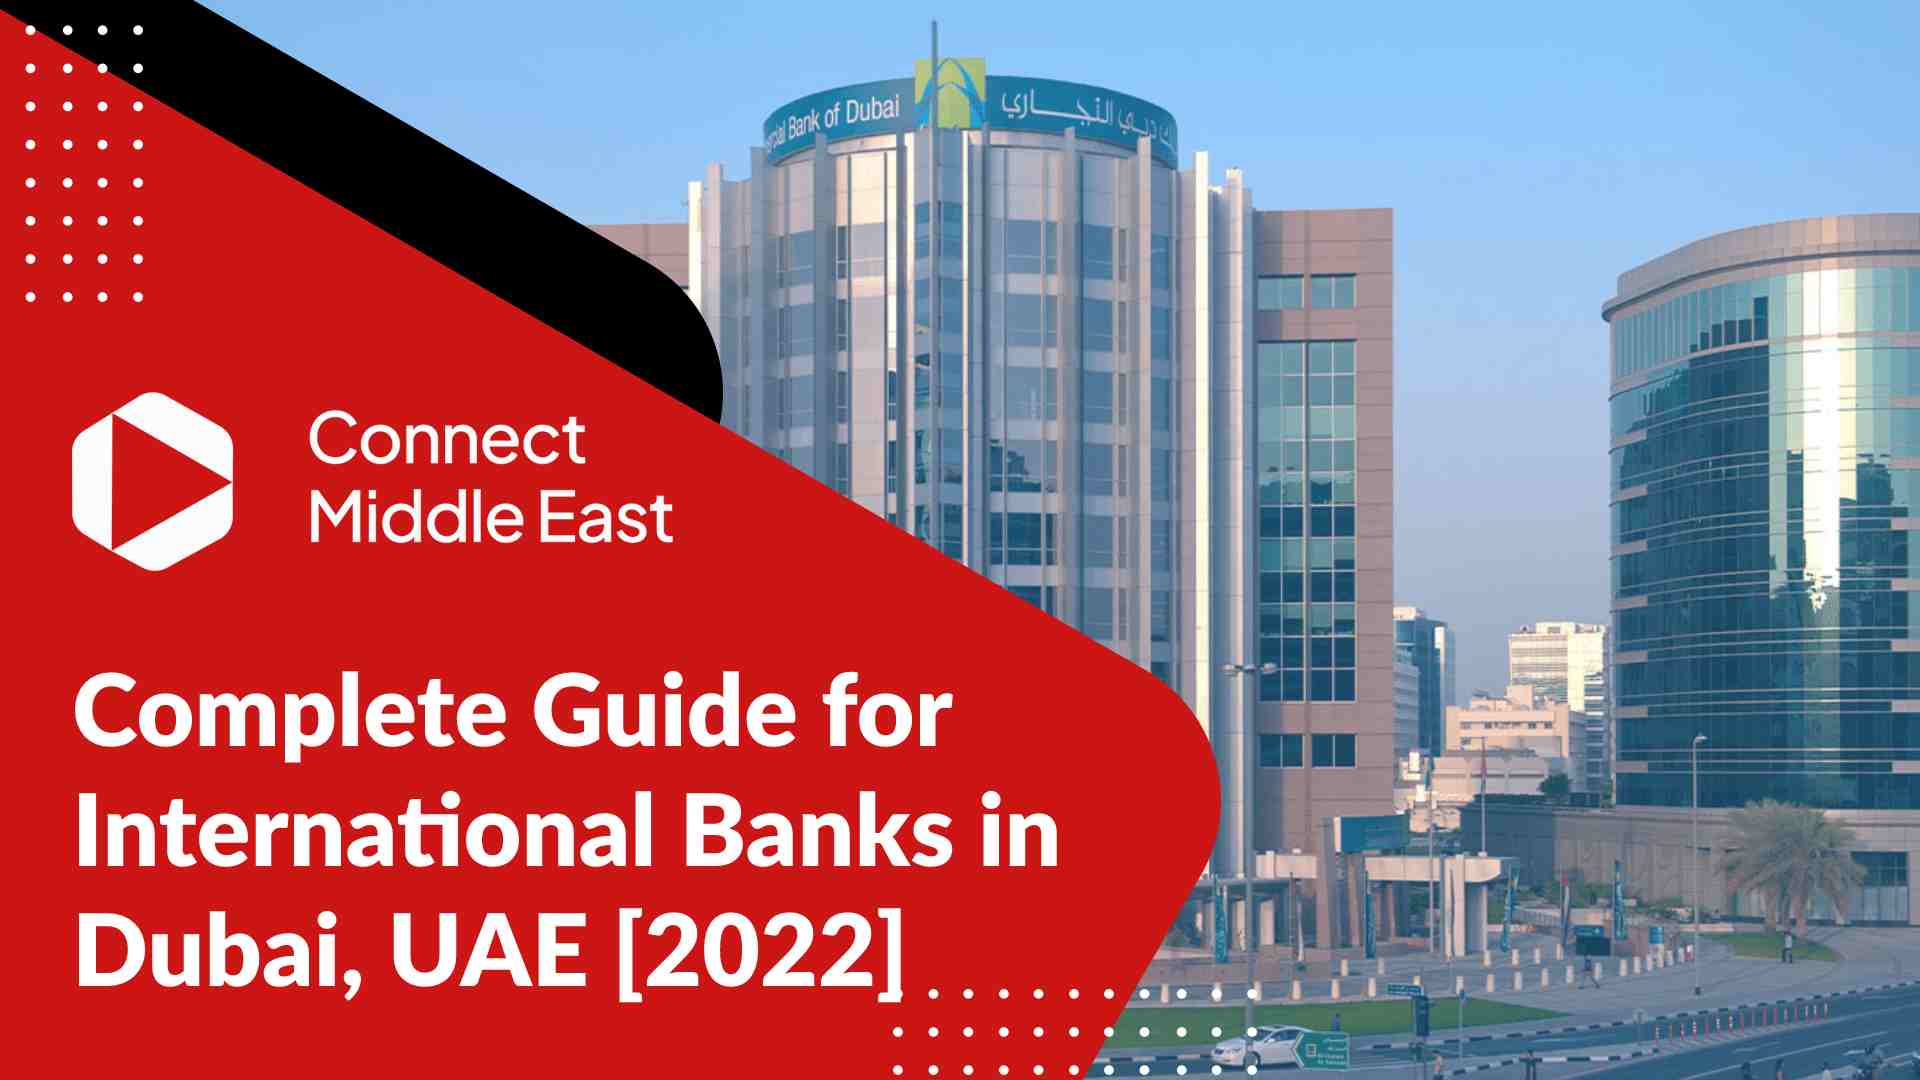 Complete Guide for International Banks in Dubai, UAE (2022)